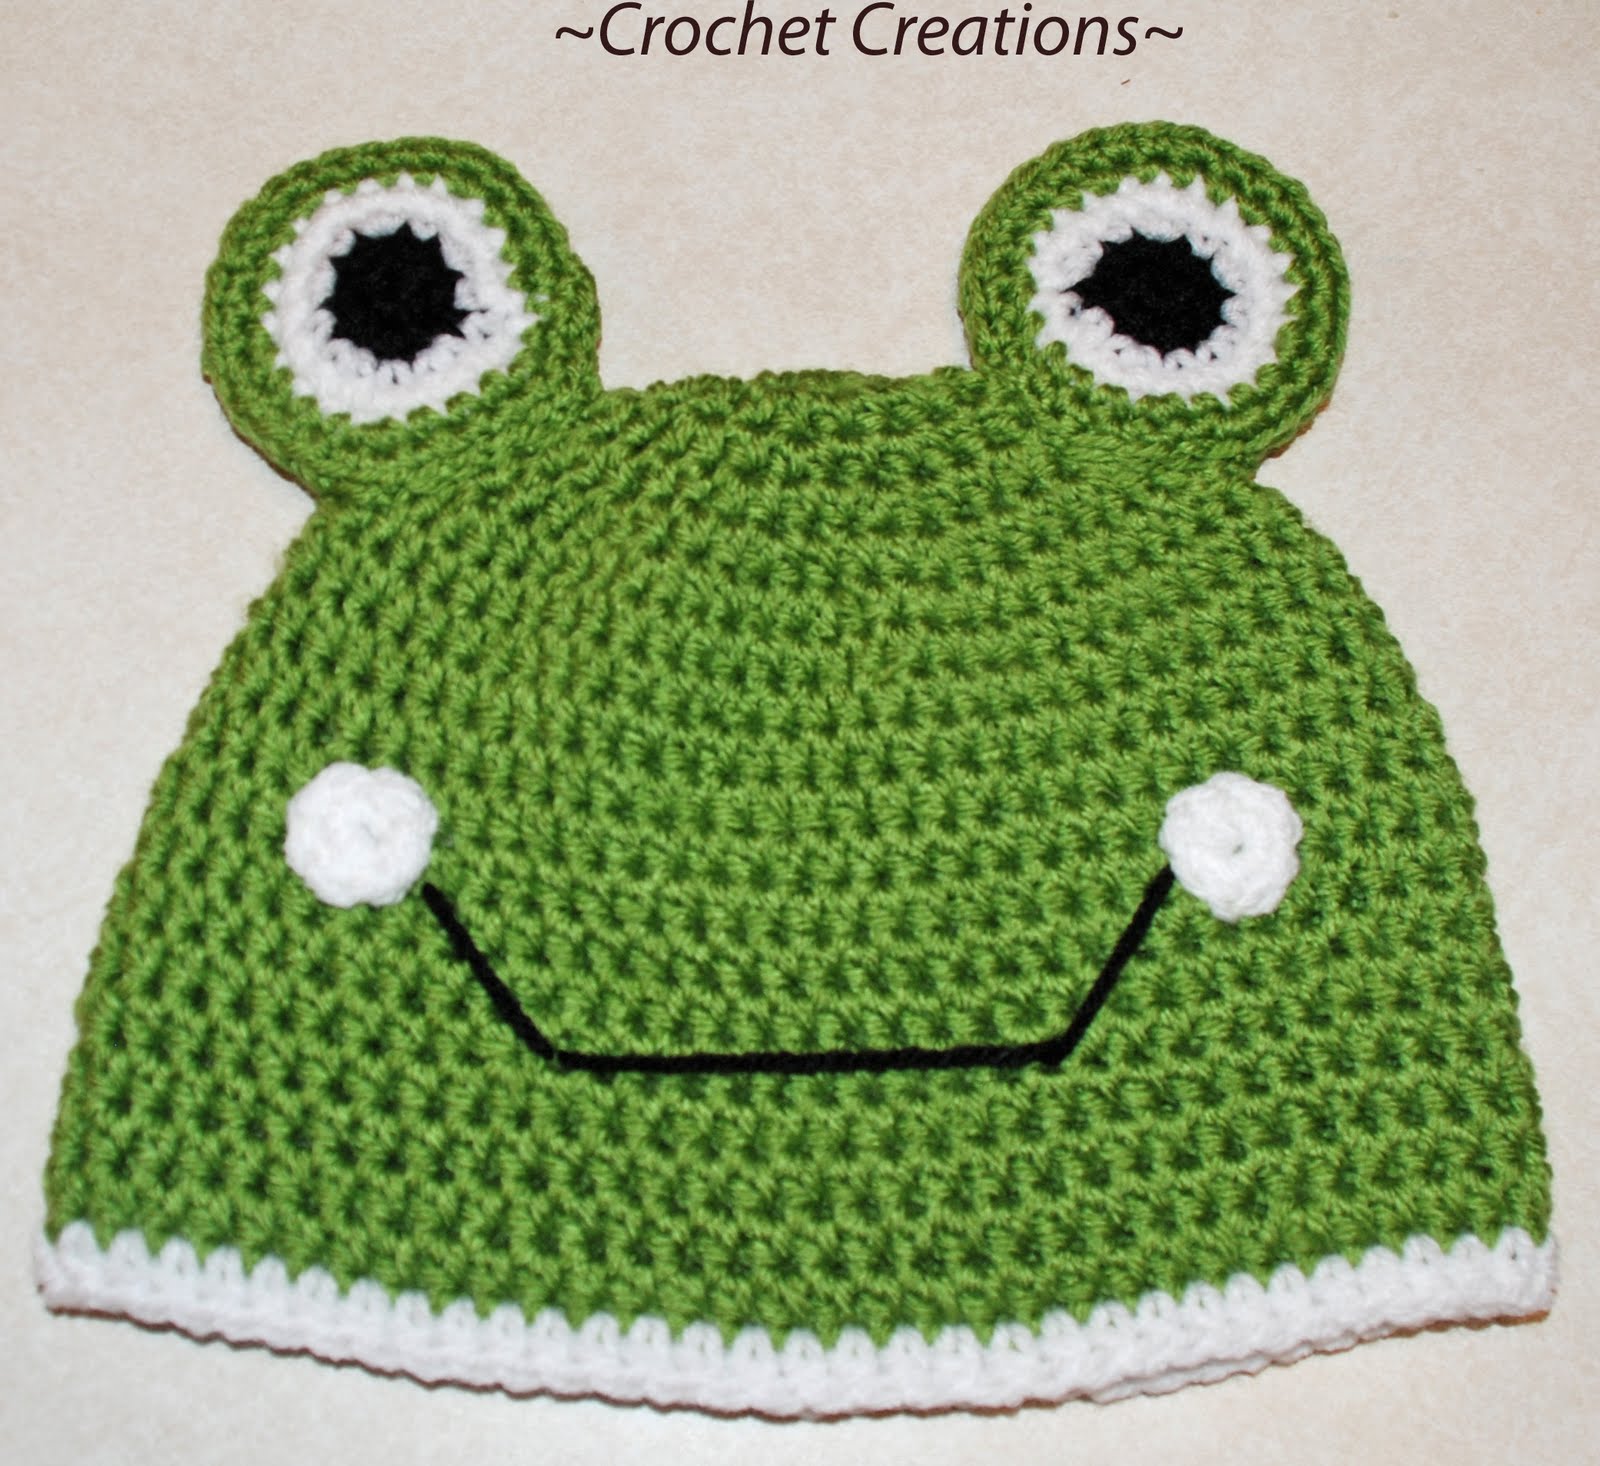 crochet hat patterns | eBay - Electro
nics, Cars, Fashion